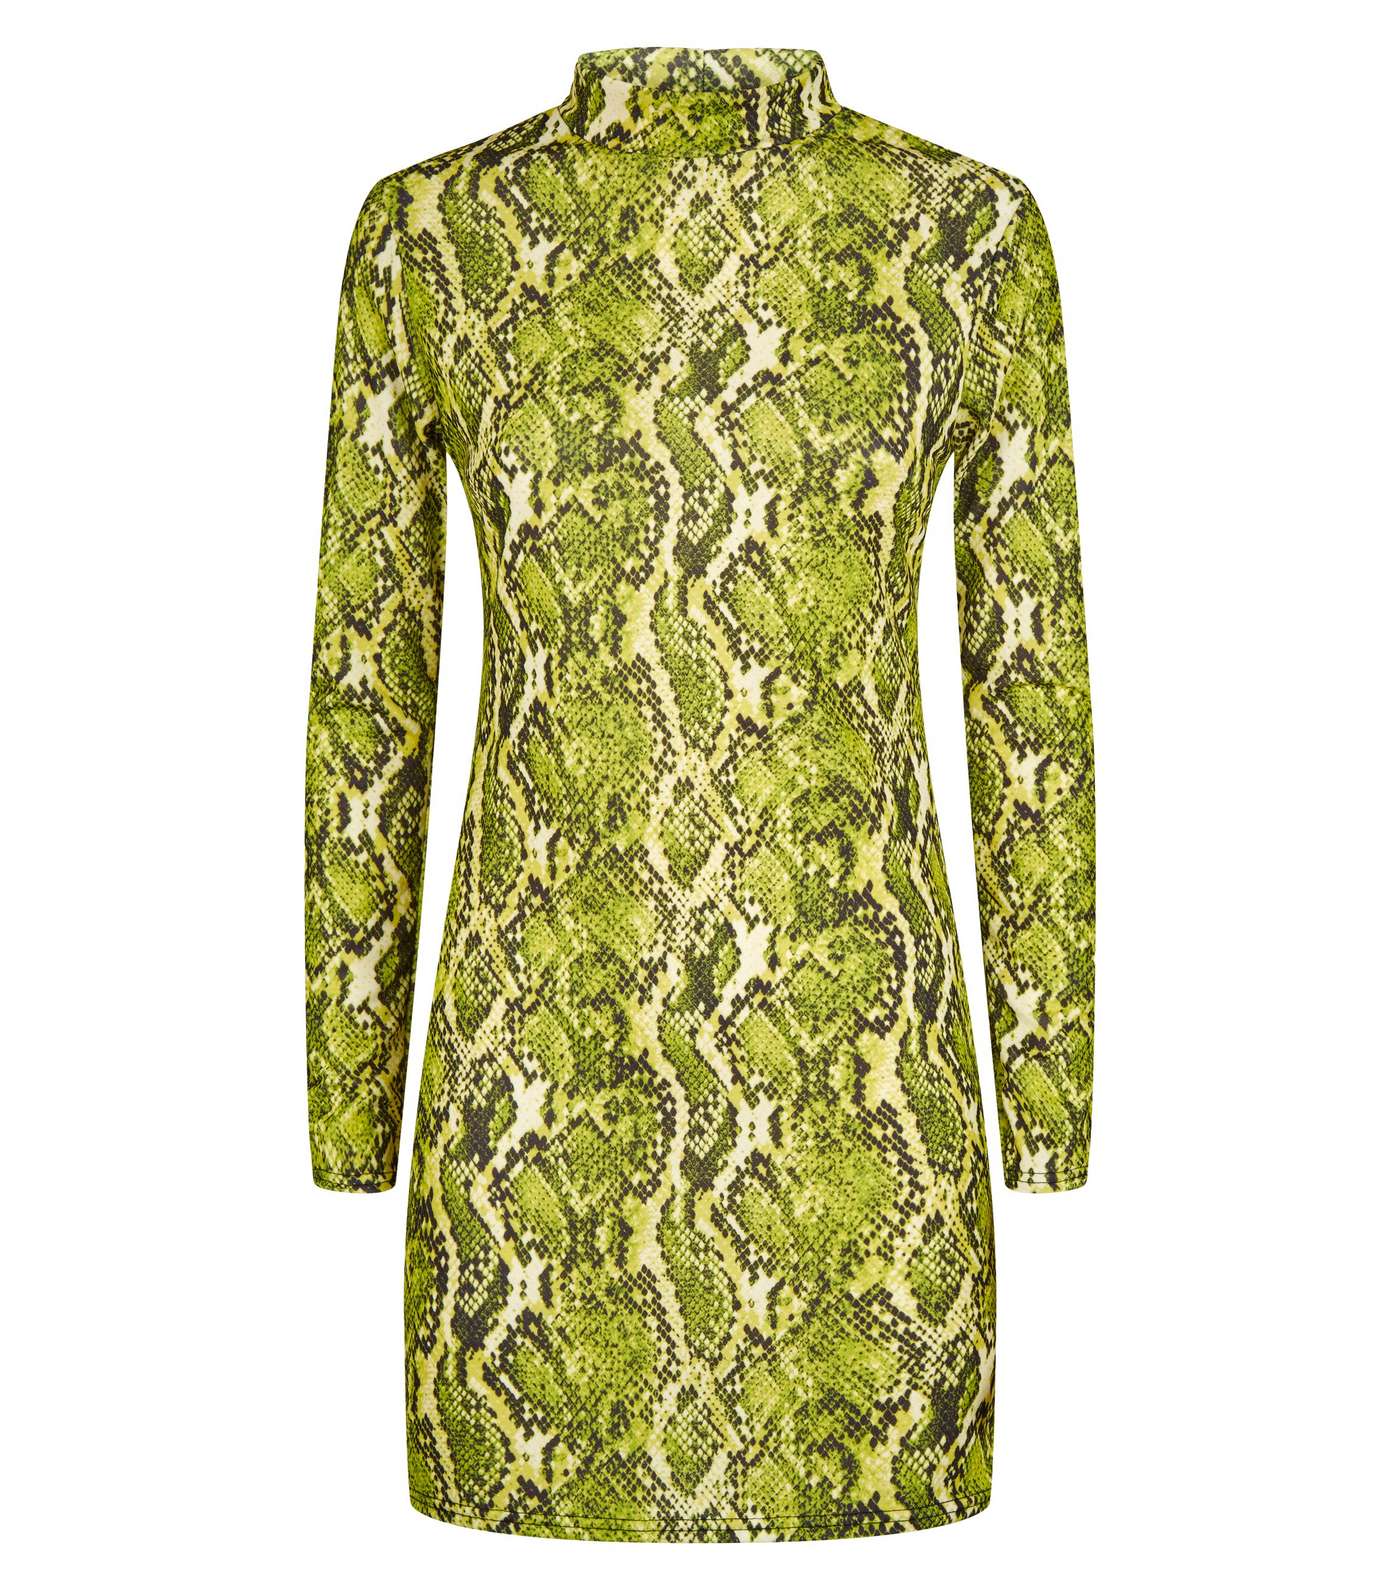 Parisian Green Neon Snake Print Bodycon Dress Image 4